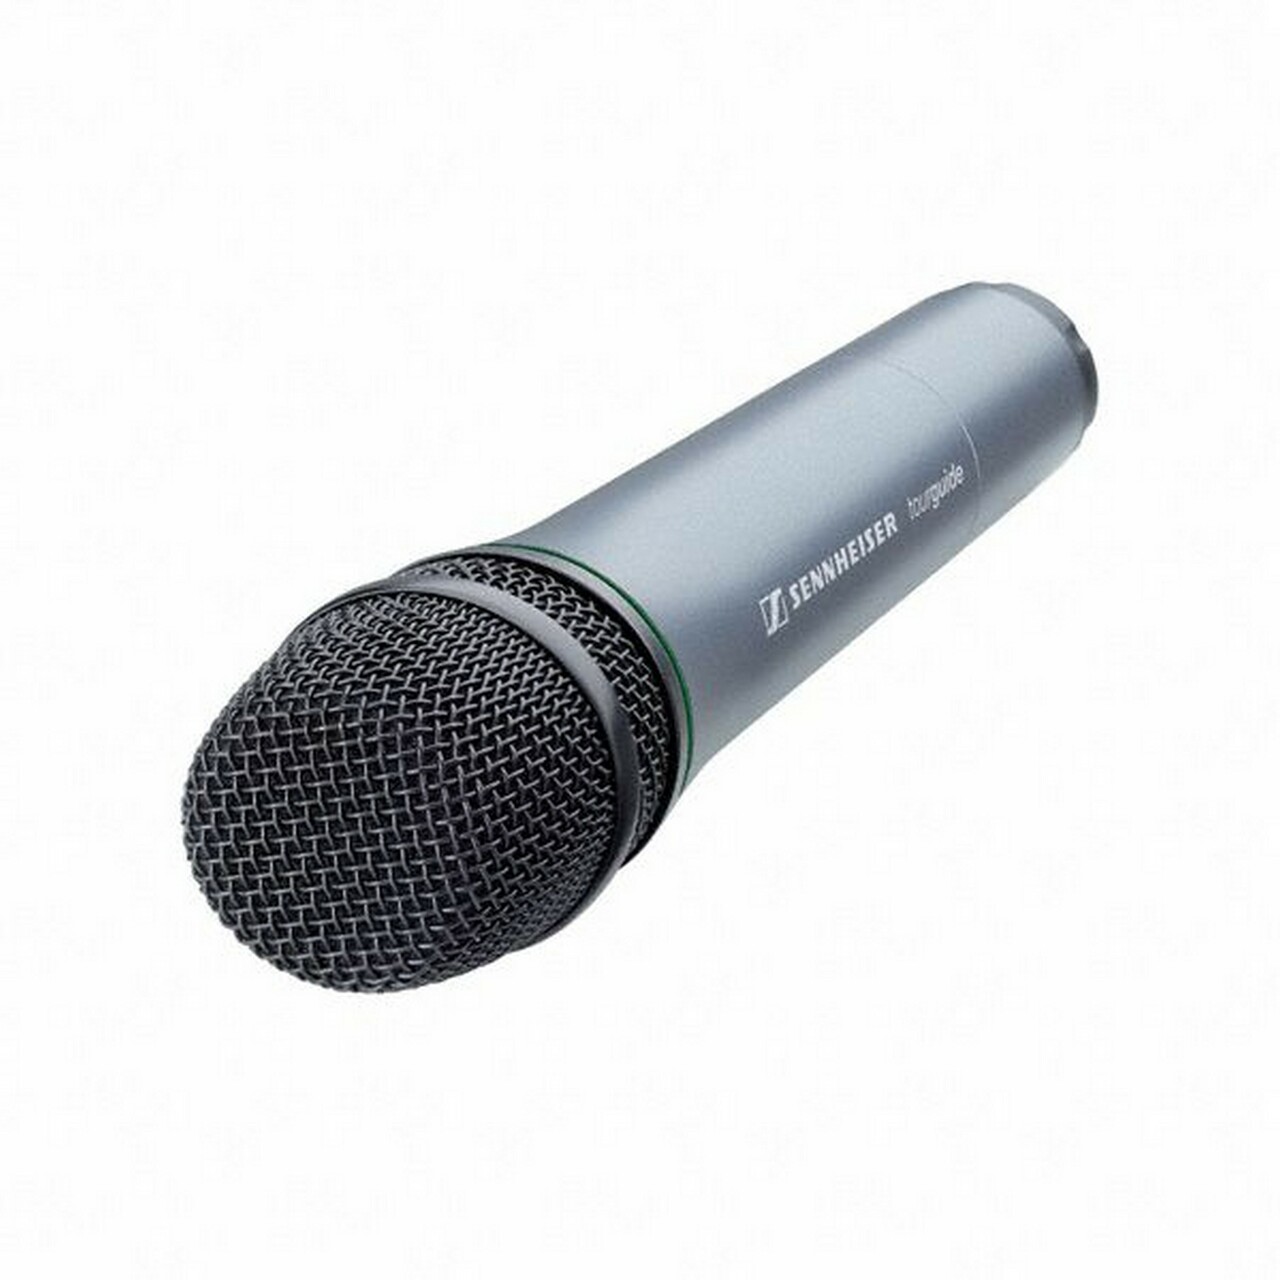 Sennheiser skm 2020-D-US microfono de 6 canales